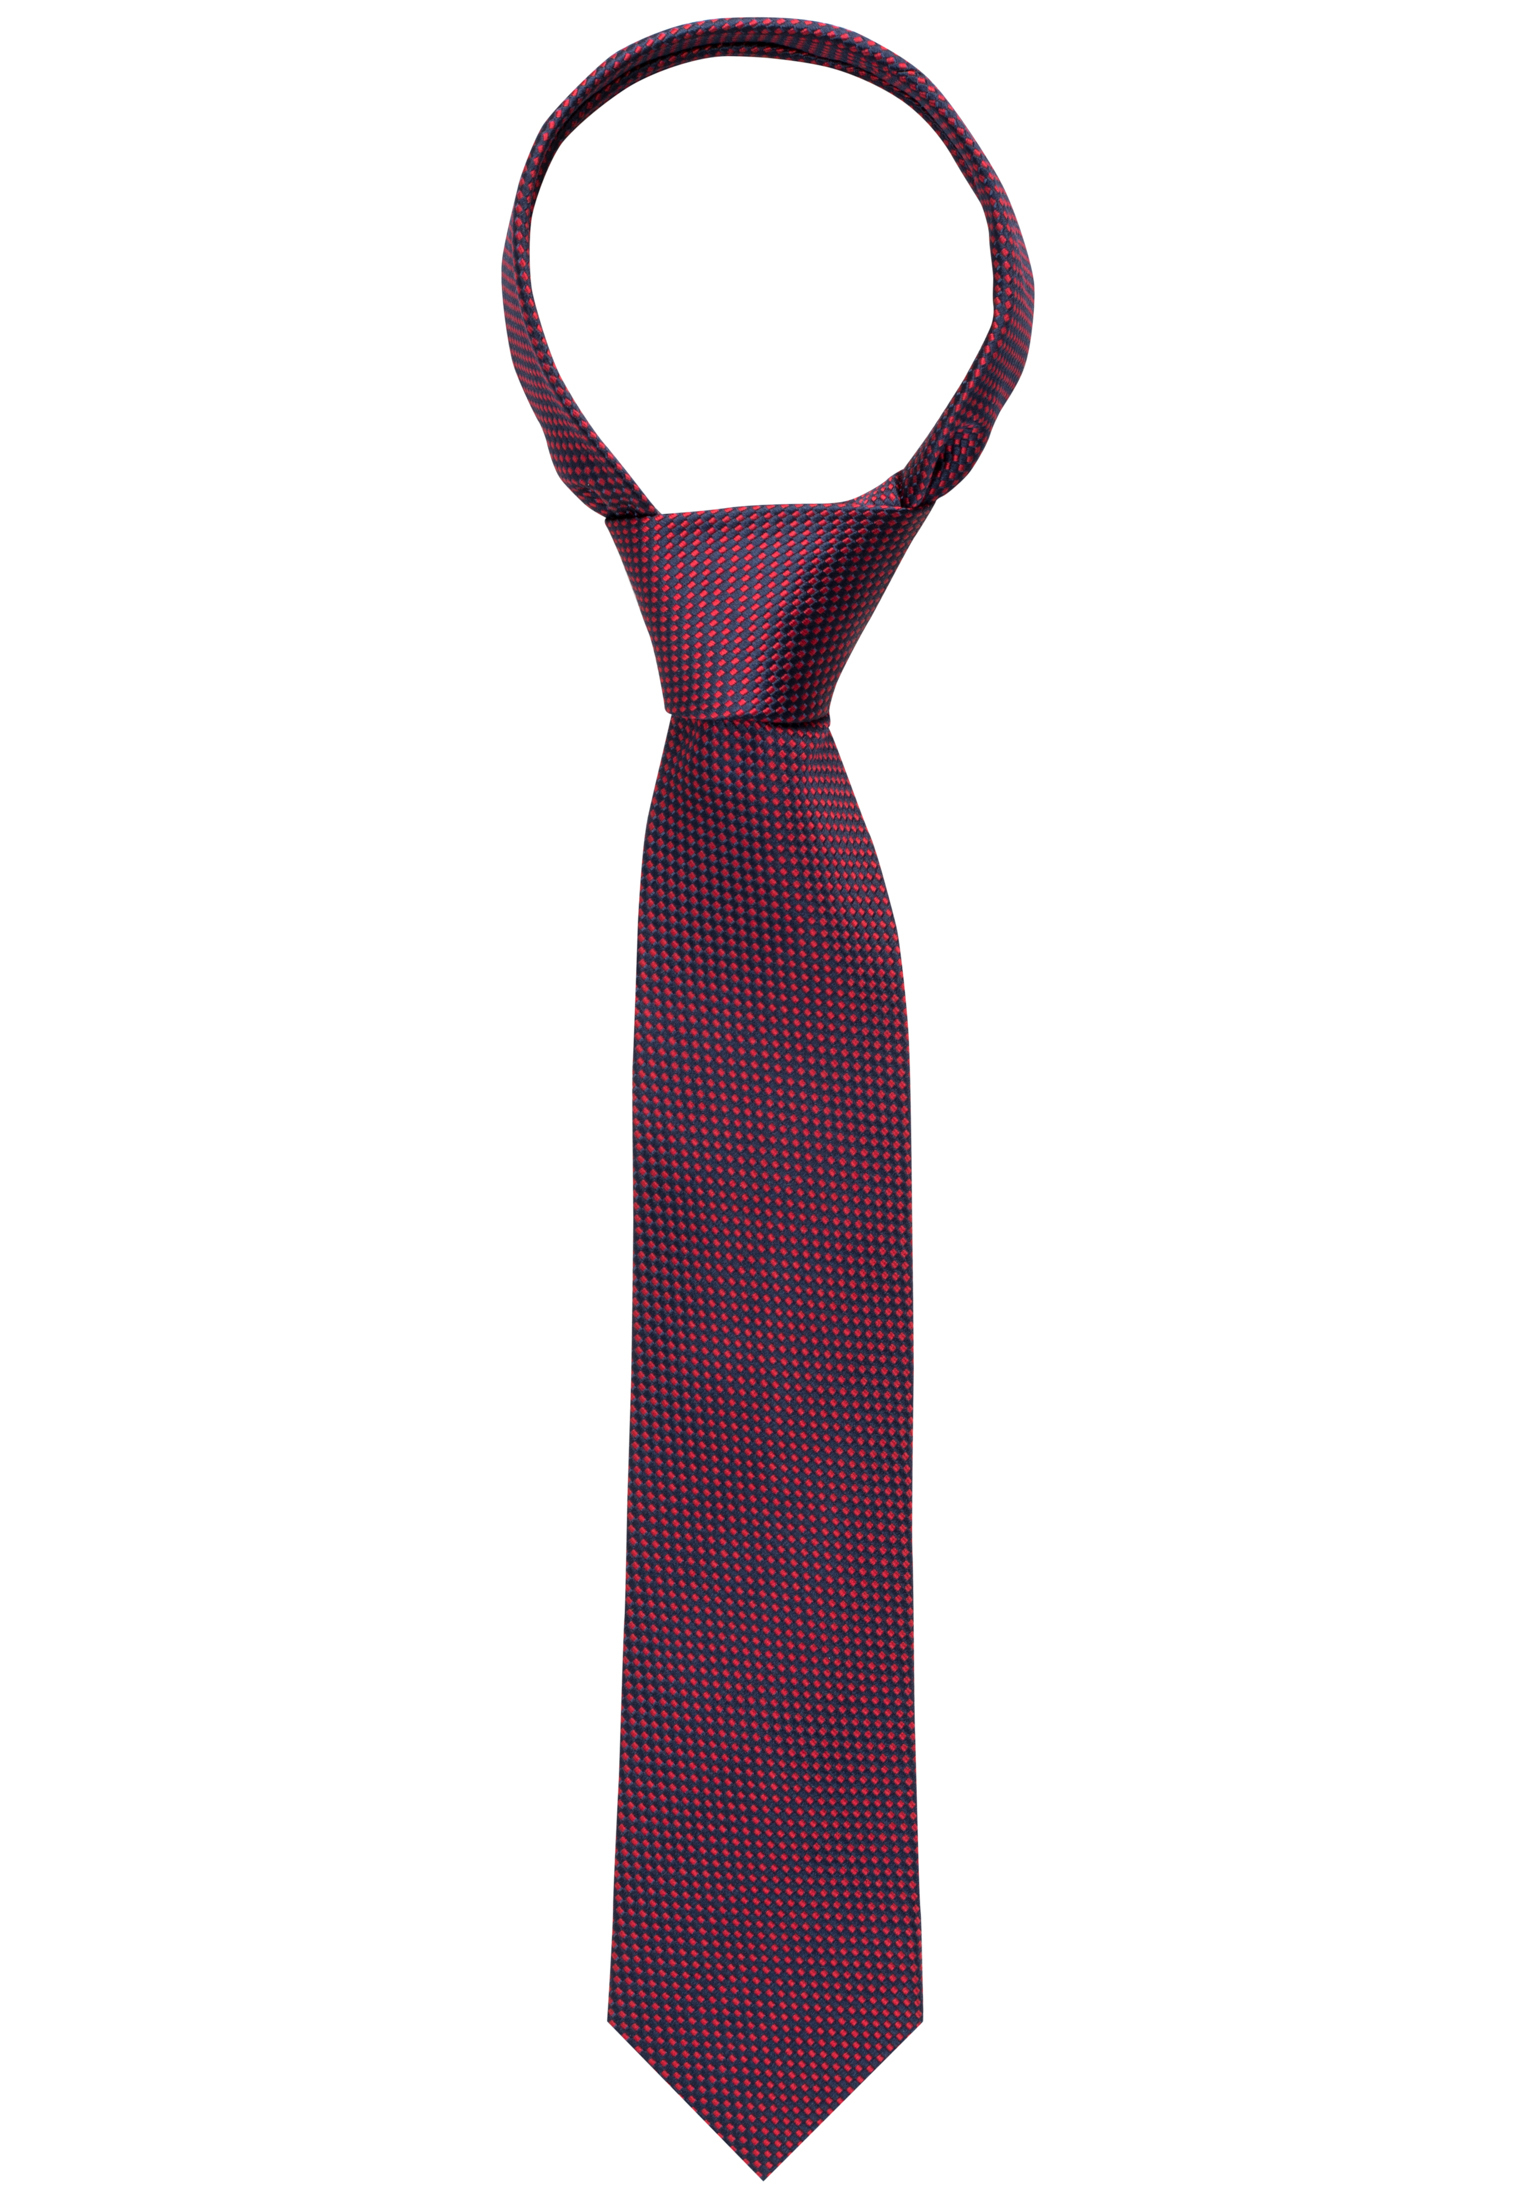 Krawatte in navy/rot strukturiert | 1AC00534-81-89-142 | navy/rot | 142